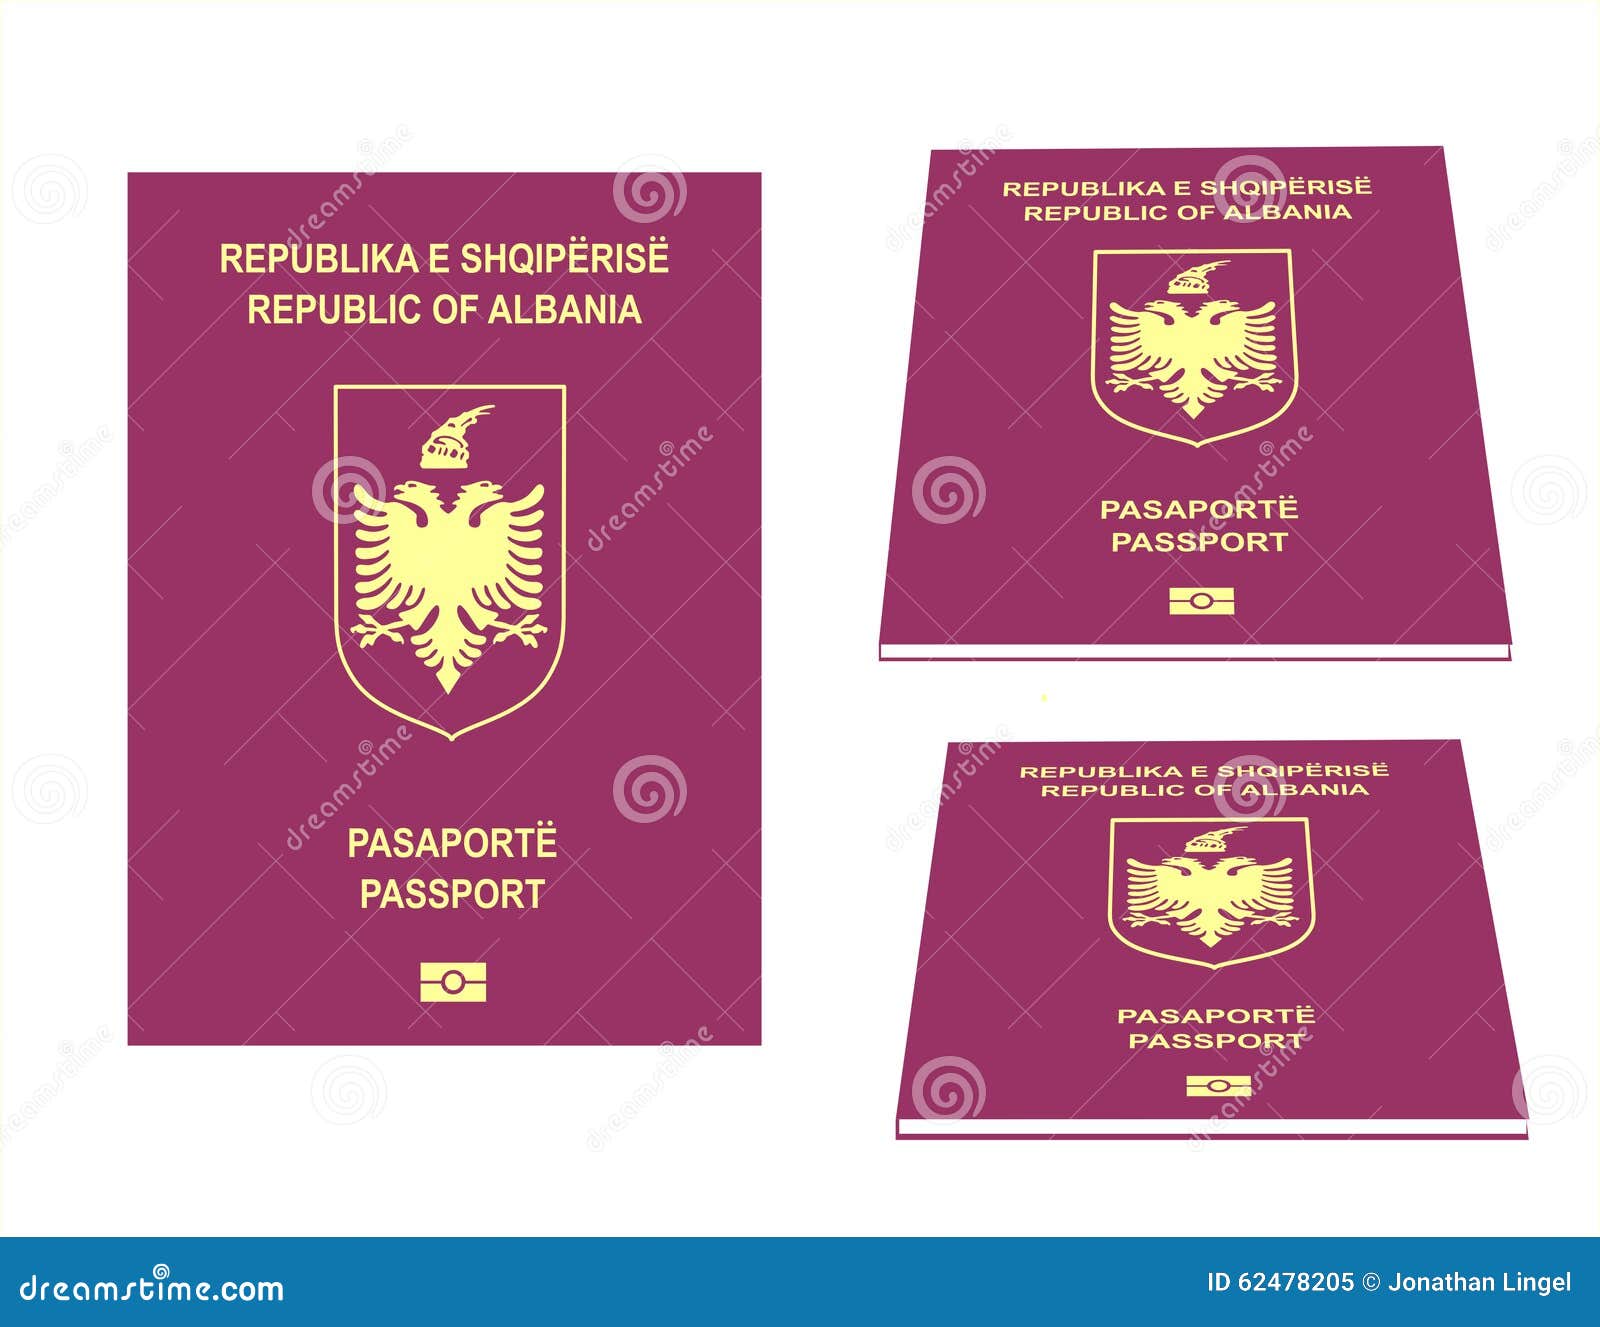 albanian passport